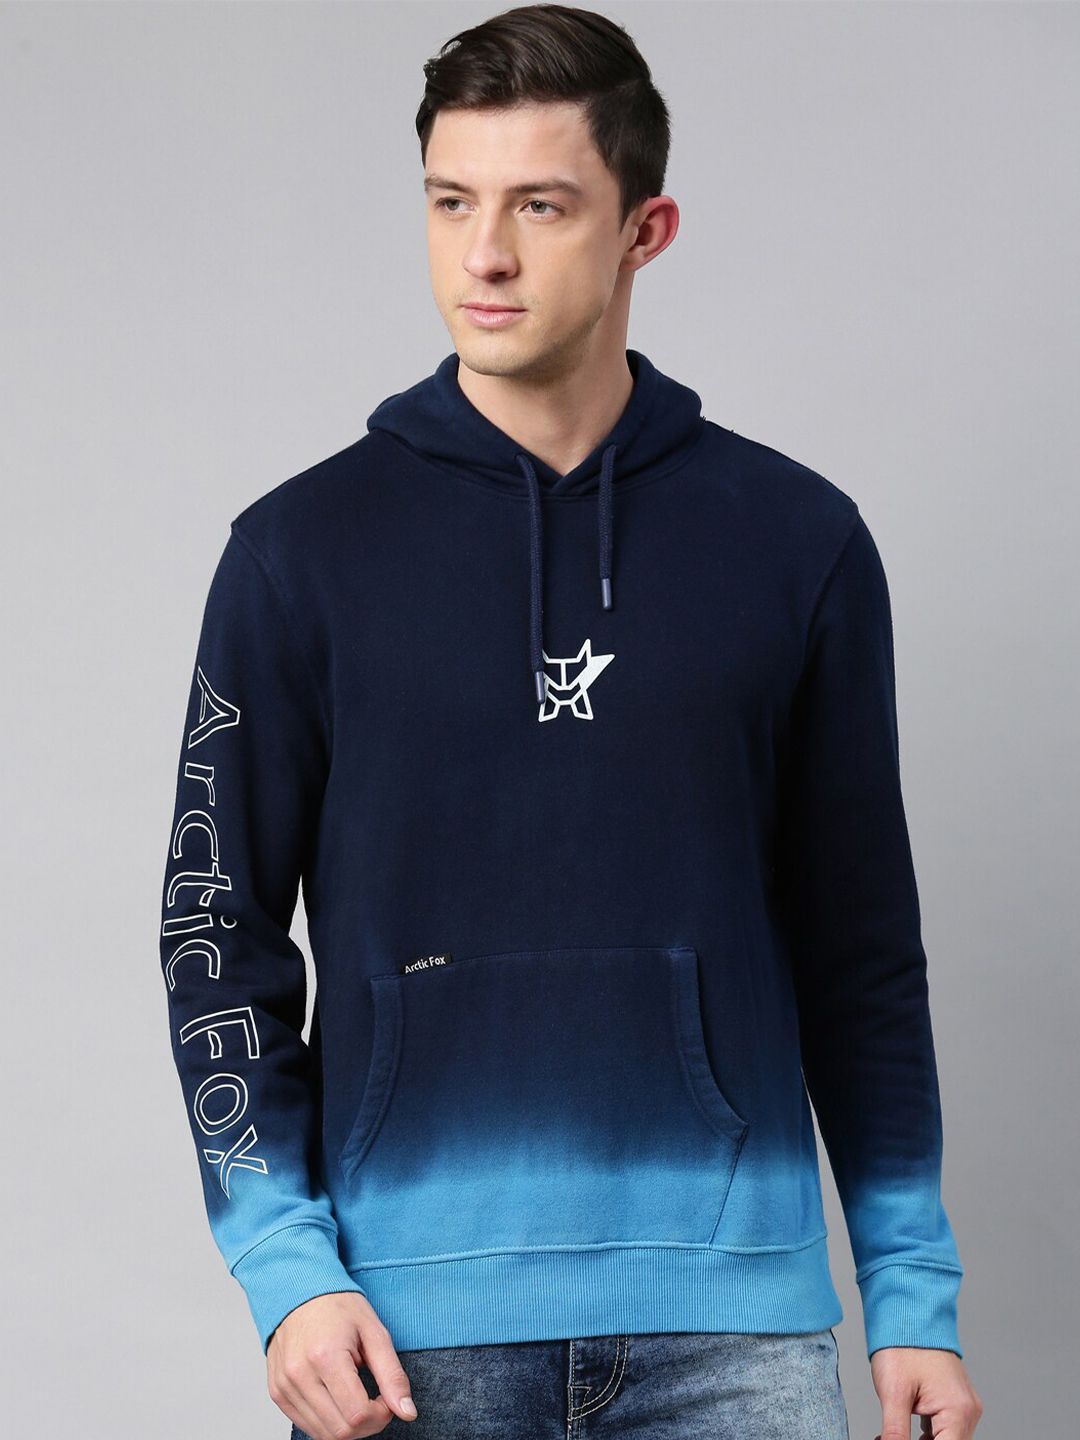 Arctic Fox Unisex Blue Printed Hooded Sweatshirt Price in India